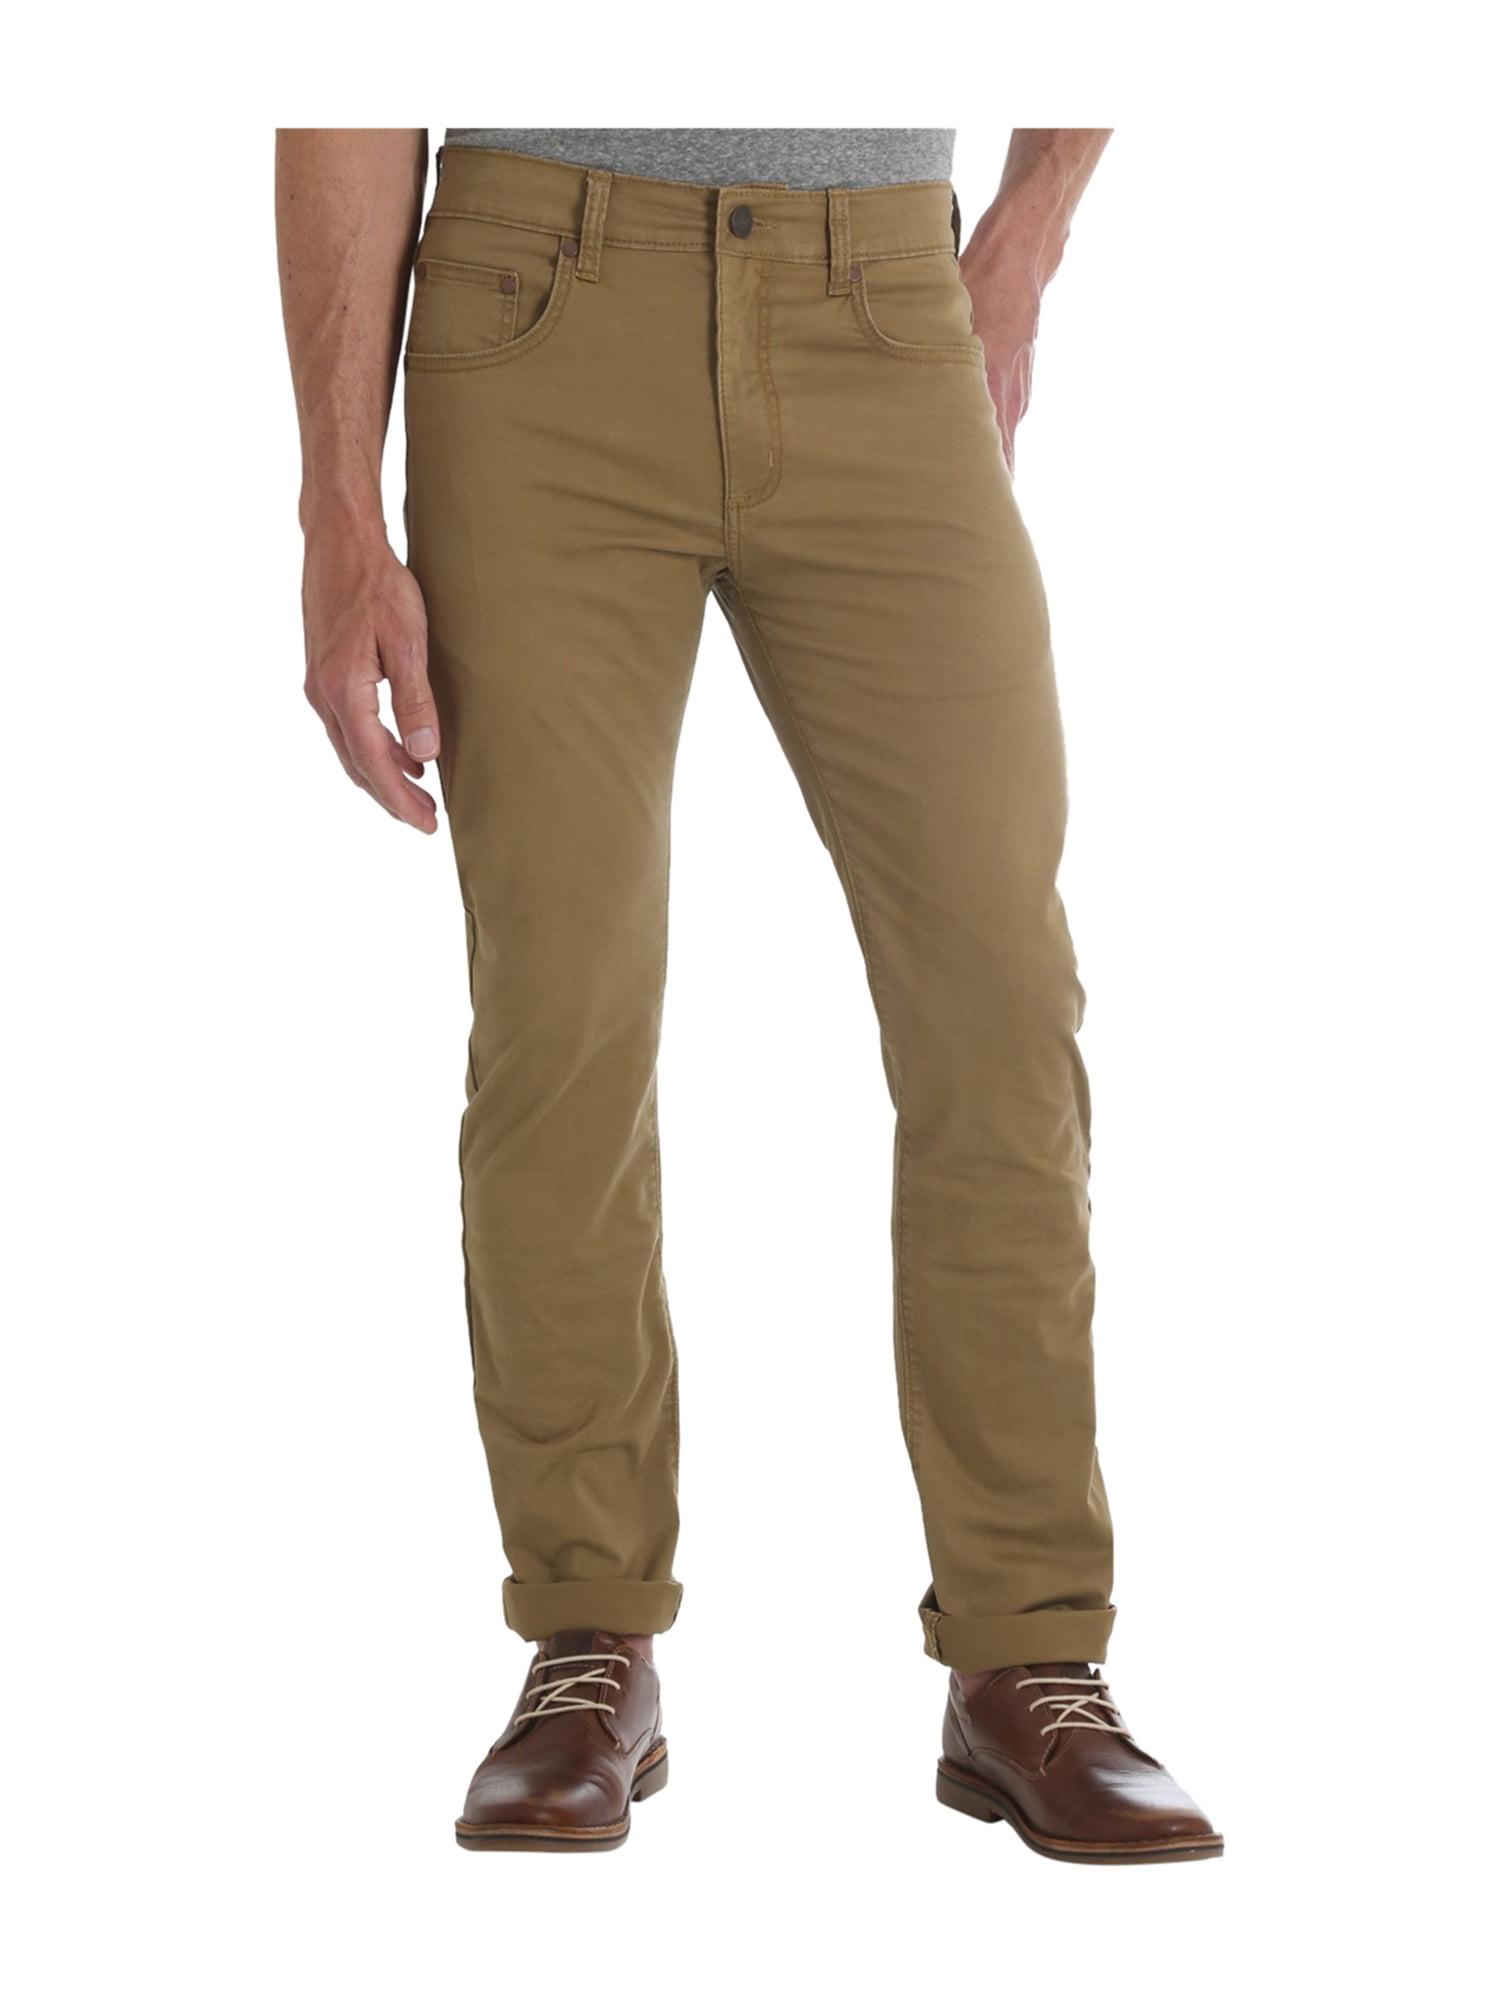 Wrangler Mens Five Pocket Casual Chino Pants tan 42x32 | Walmart Canada